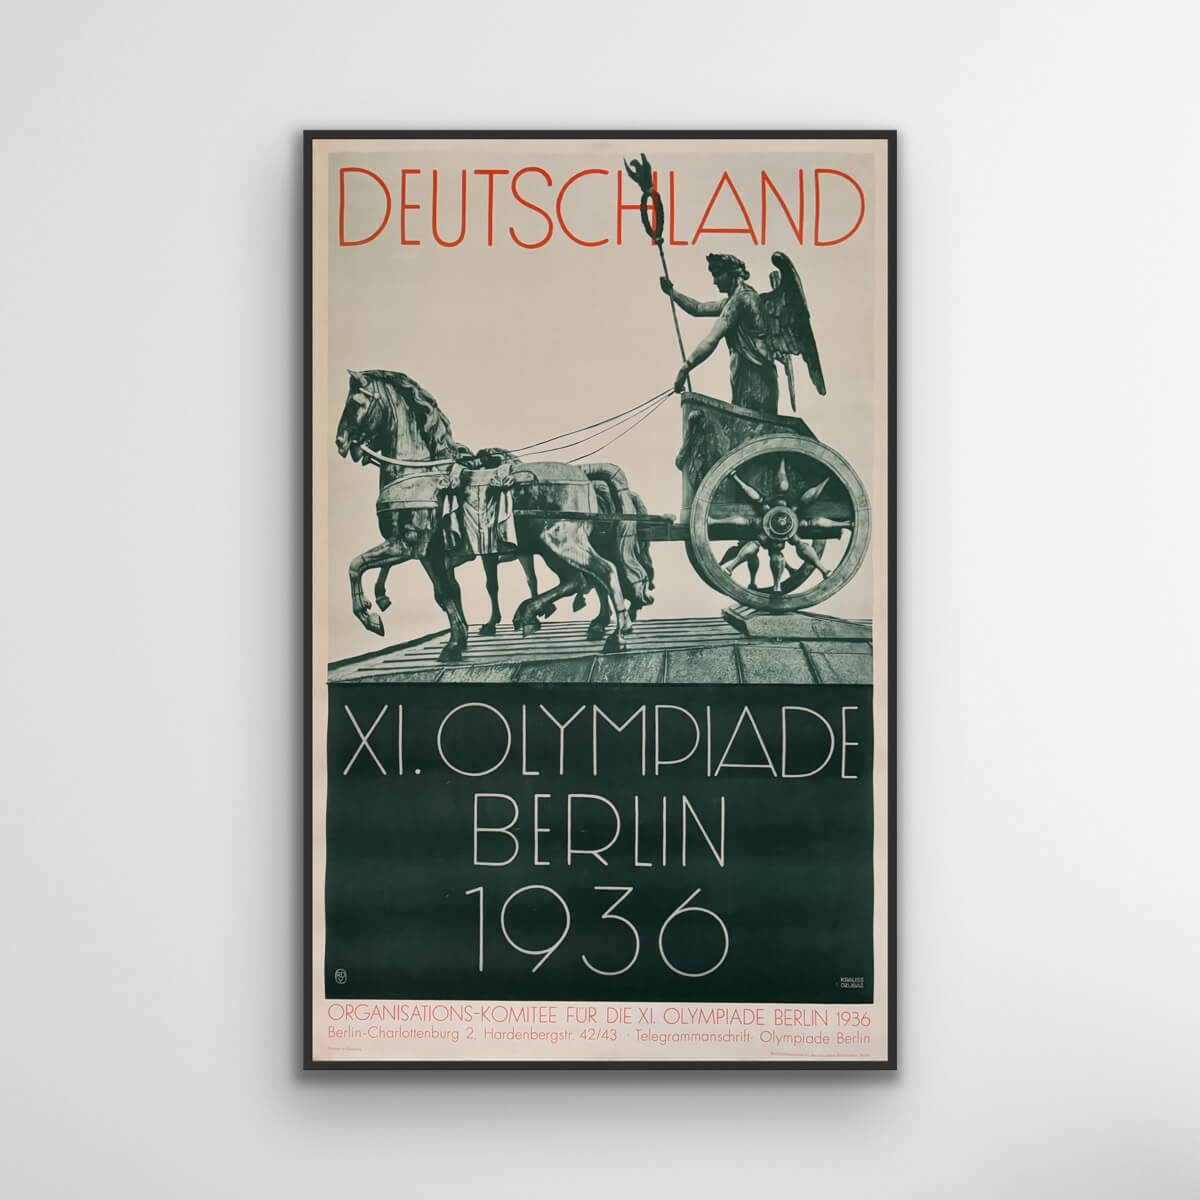 XI Olympiad Berlin 1936